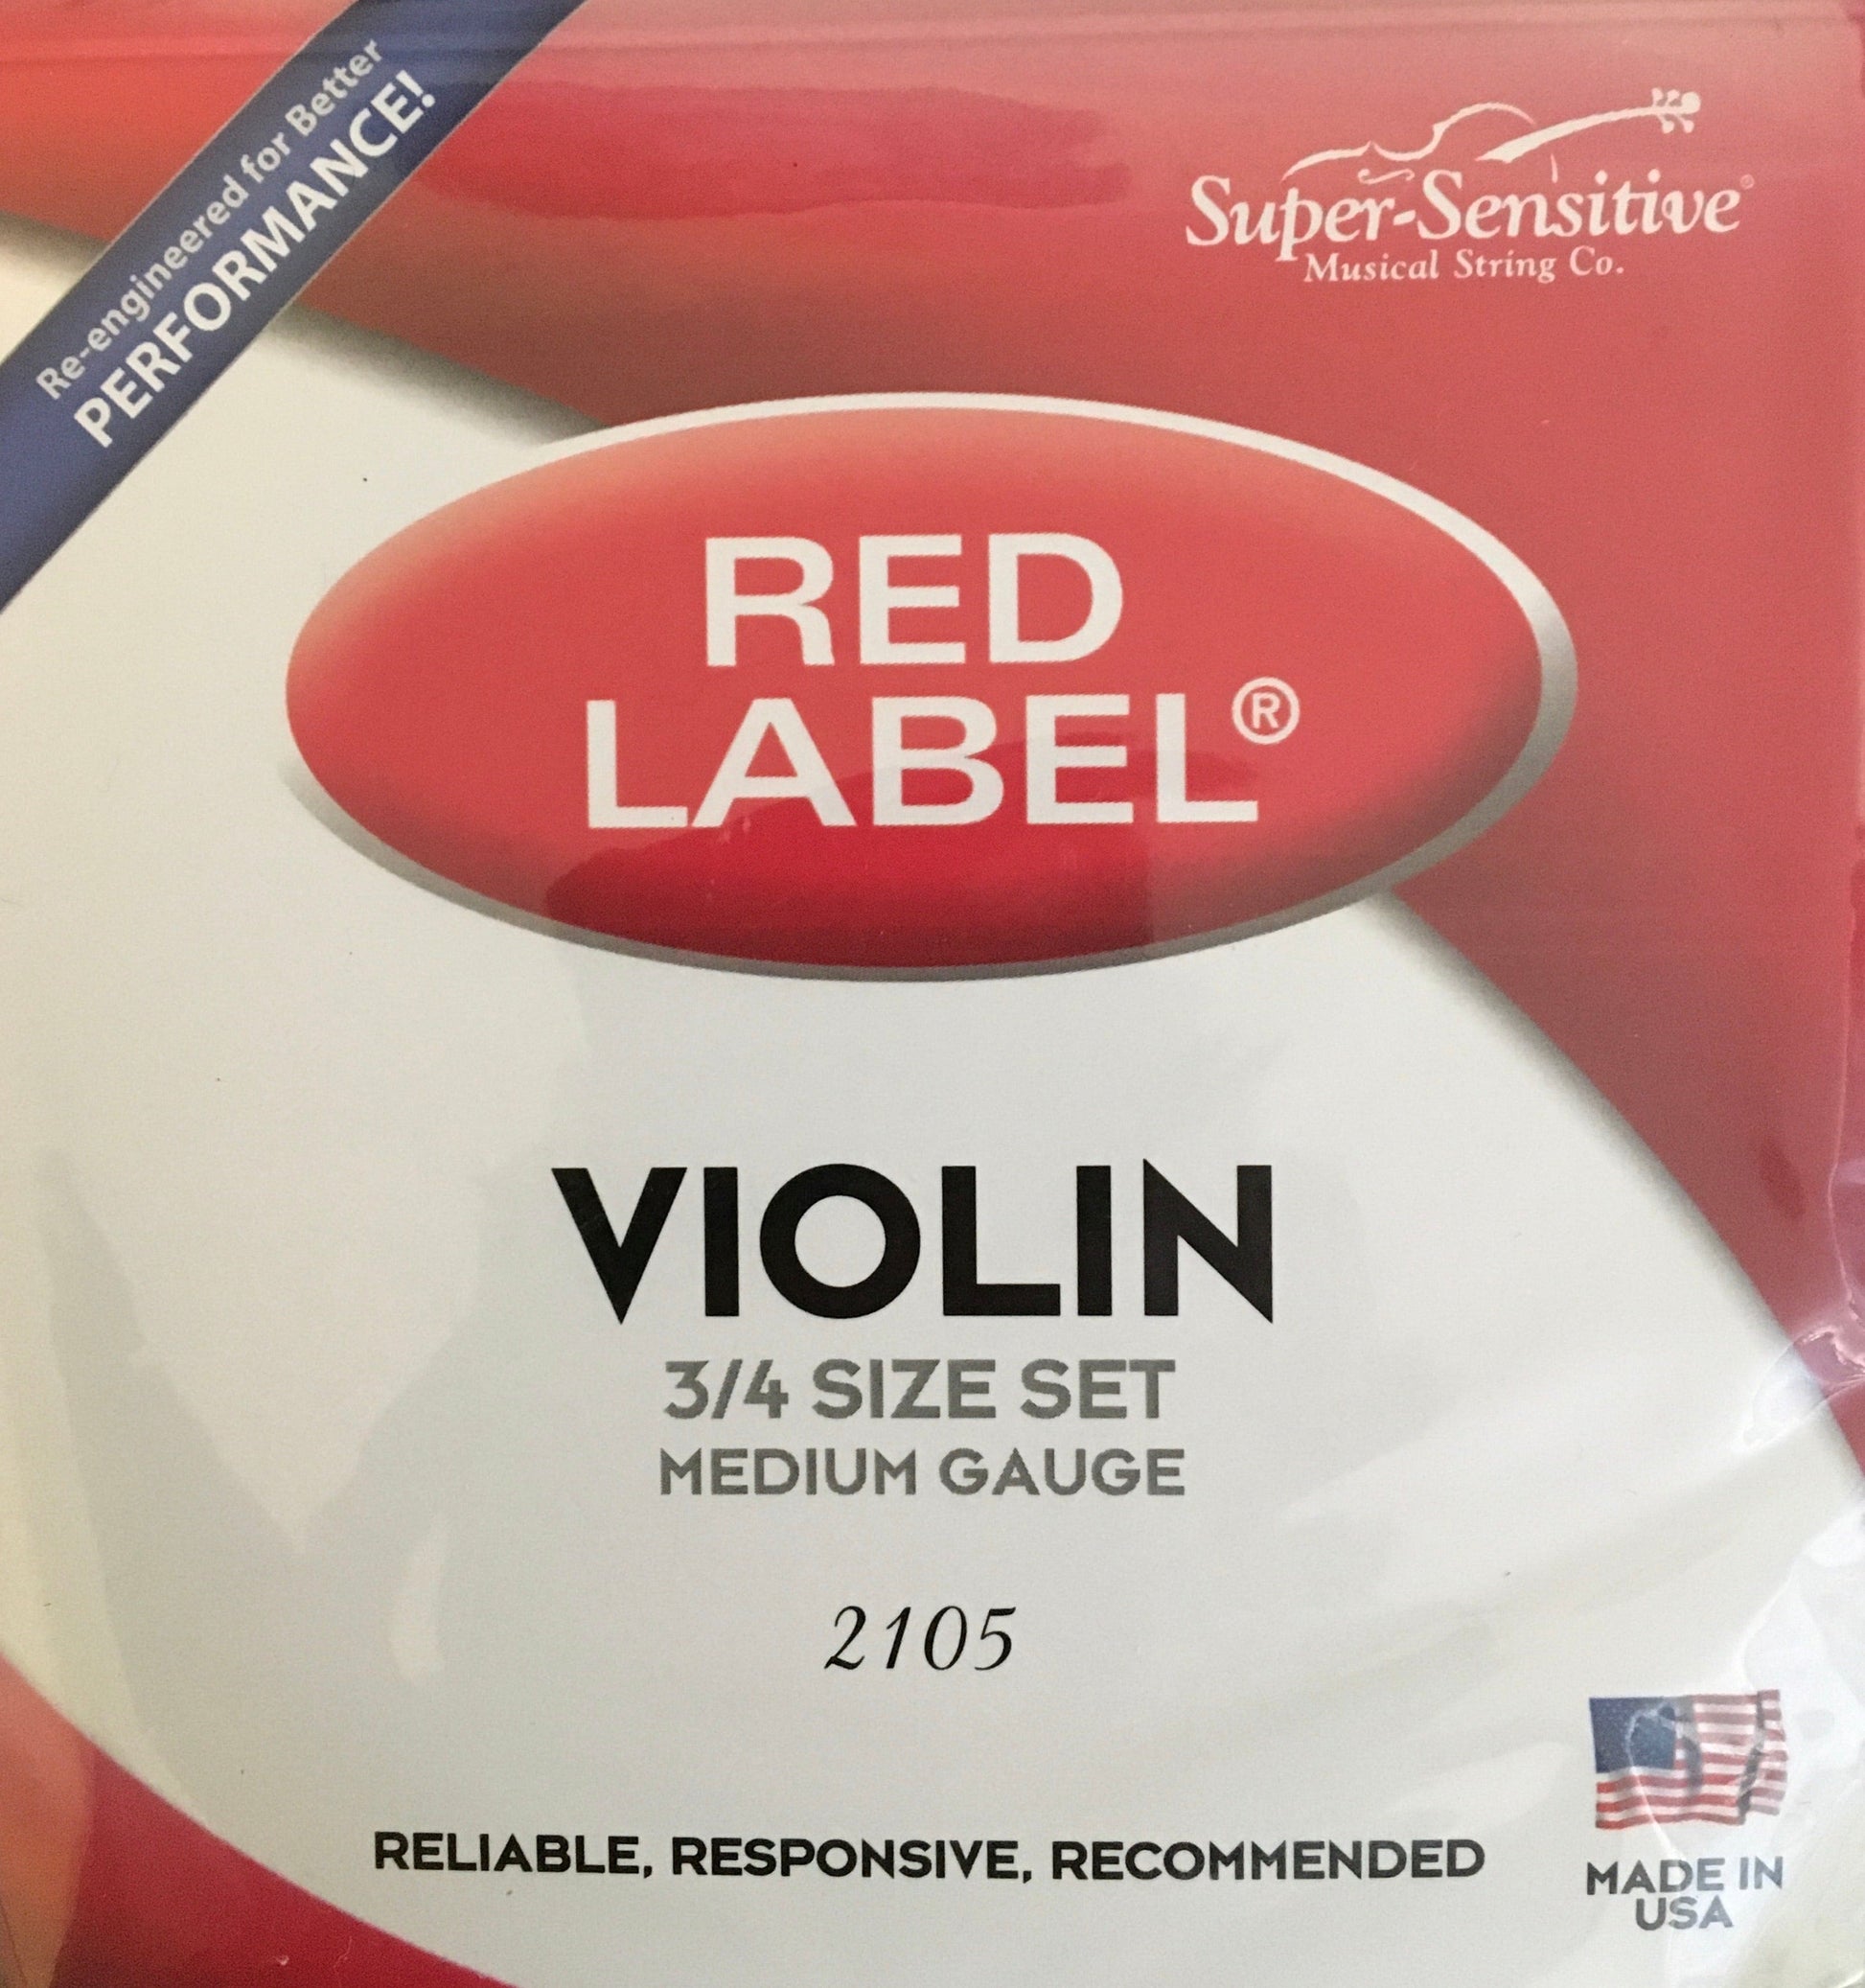 Super-Sensitive Red Label Violin Strings - 3/4 Strings, Bows & More